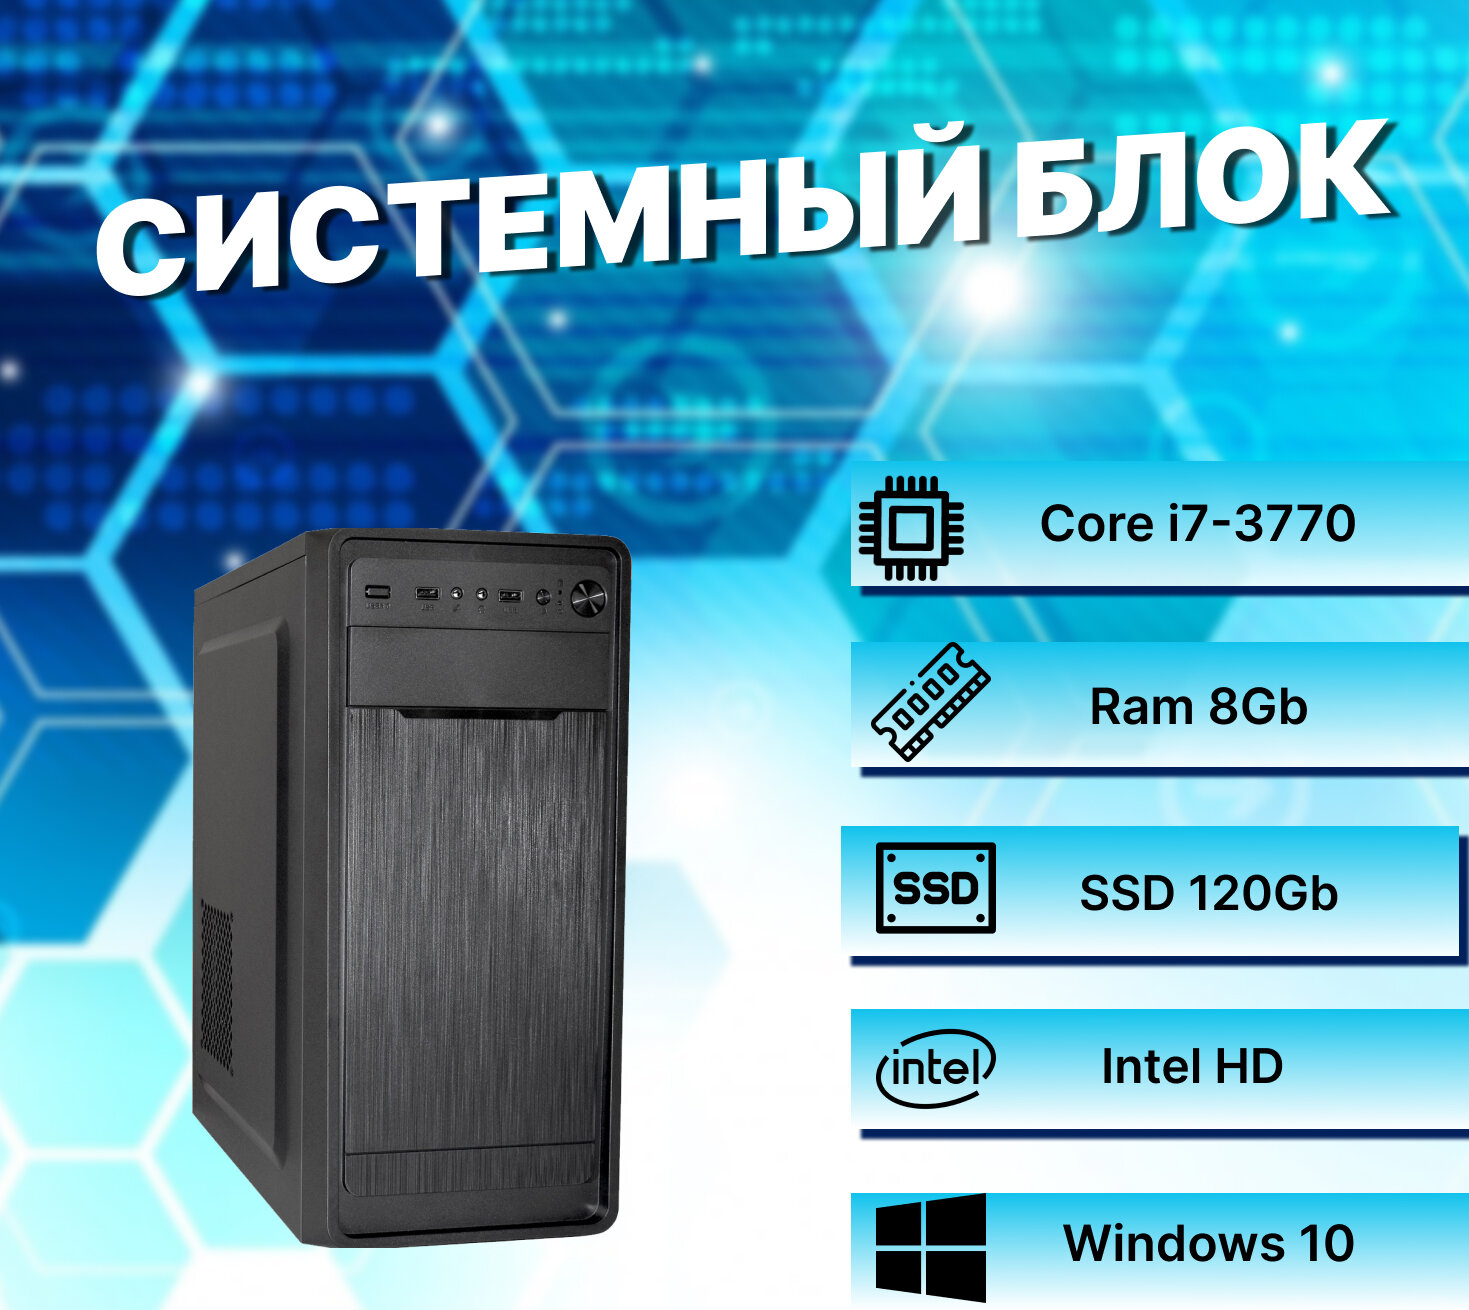 Системный блок Intel Core I7-3770 (3.4ГГц)/ RAM 8Gb/ SSD 120Gb/ Intel HD/ Windows 10 Pro